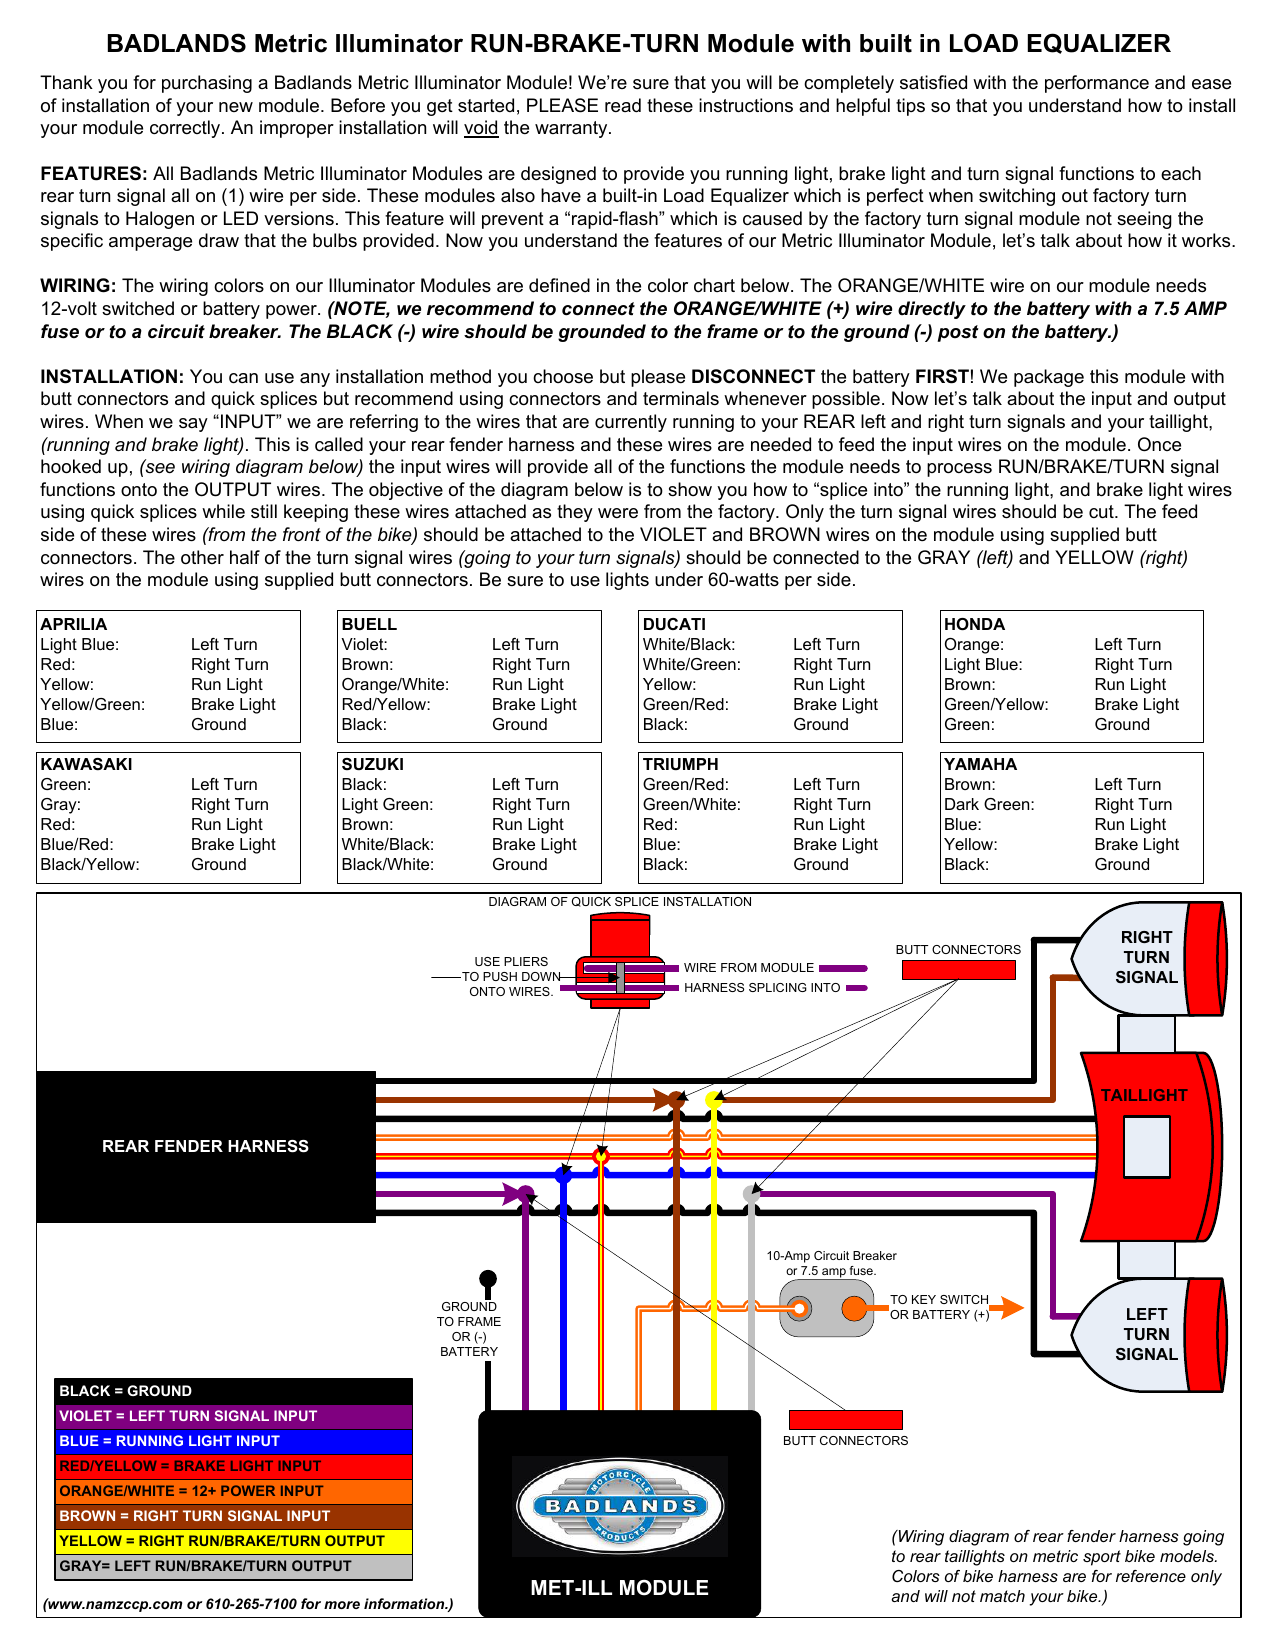 BADLANDS Metric Illuminator RUN-BRAKE | Manualzz LED Tail Light Wiring Diagram Manualzz